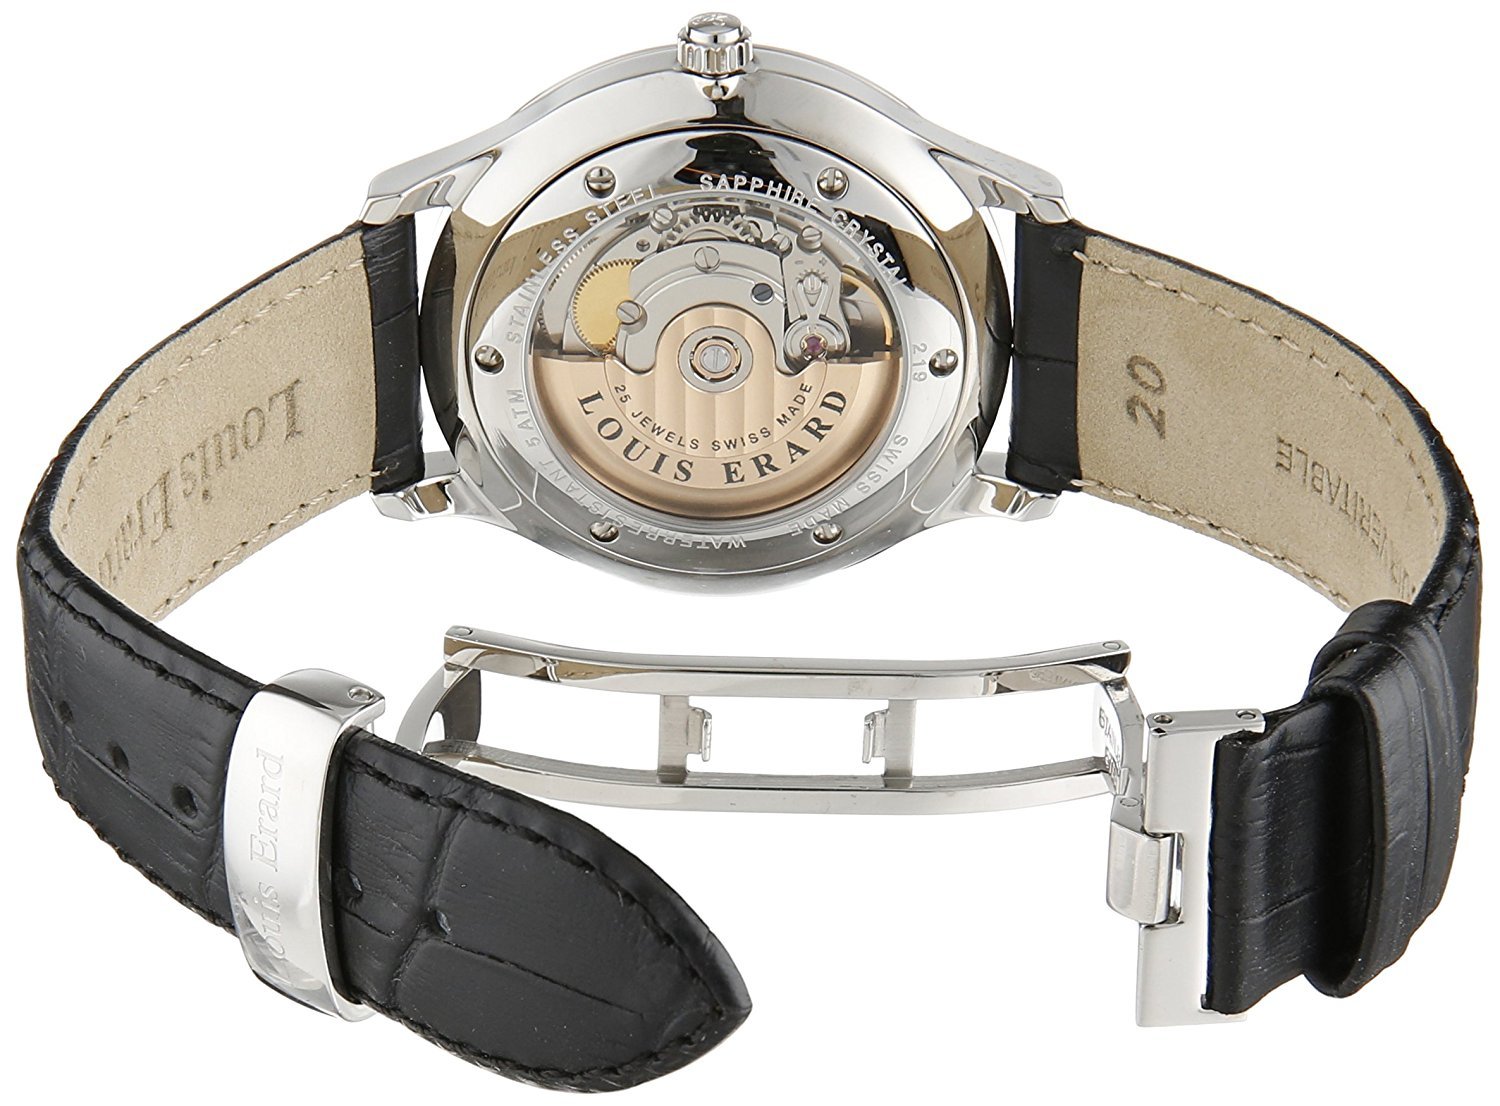 Louis Erard Men's 69219AA02.BDC82 1931 Swiss Automatic Watch